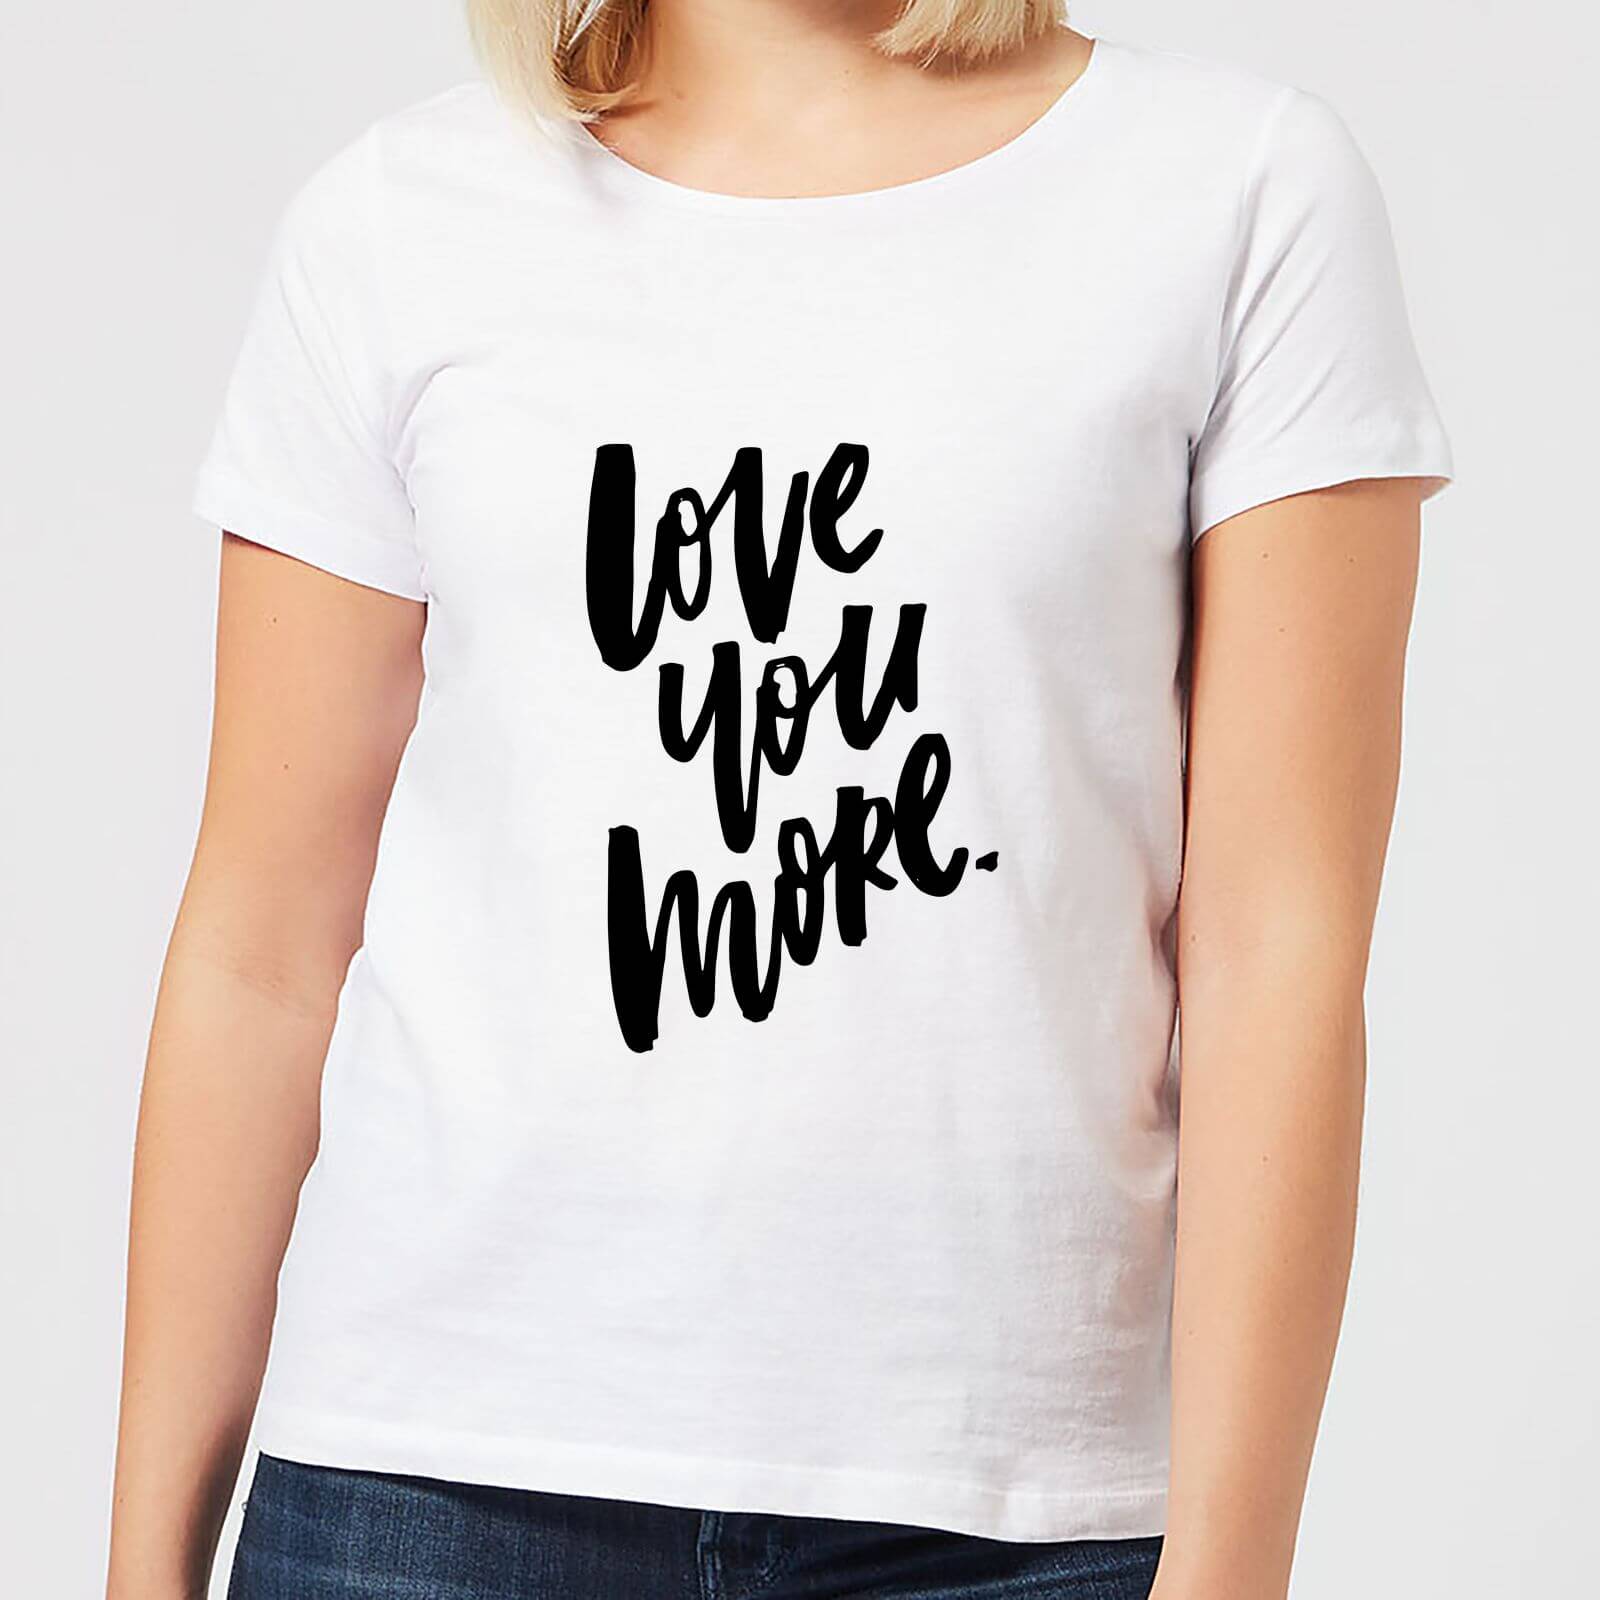 Love You More Women's T-Shirt - White - XXL - White